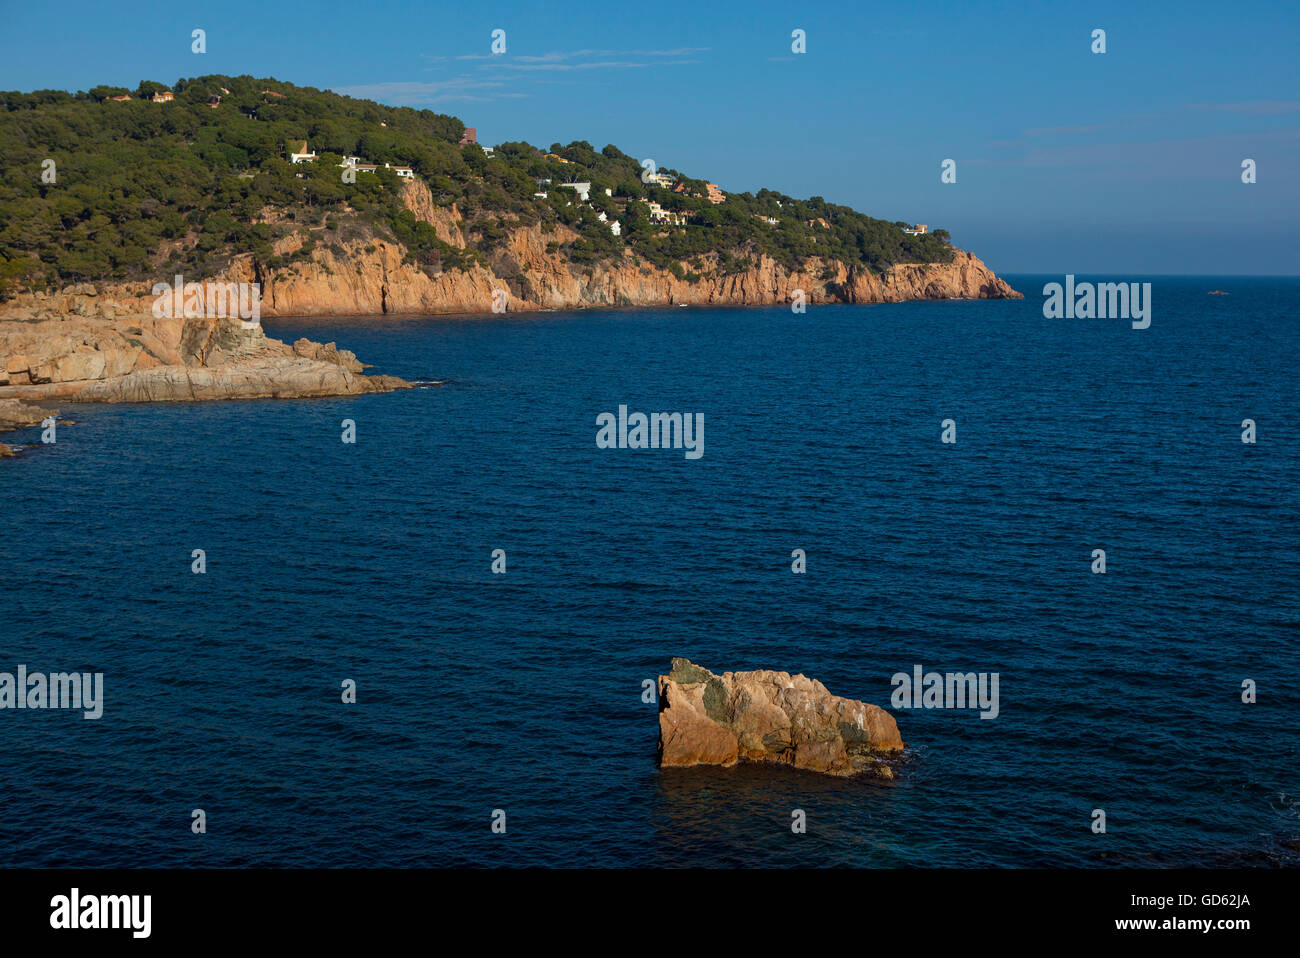 Rock on the coastline at Tamariu, Catalonia, Spain Stock Photo